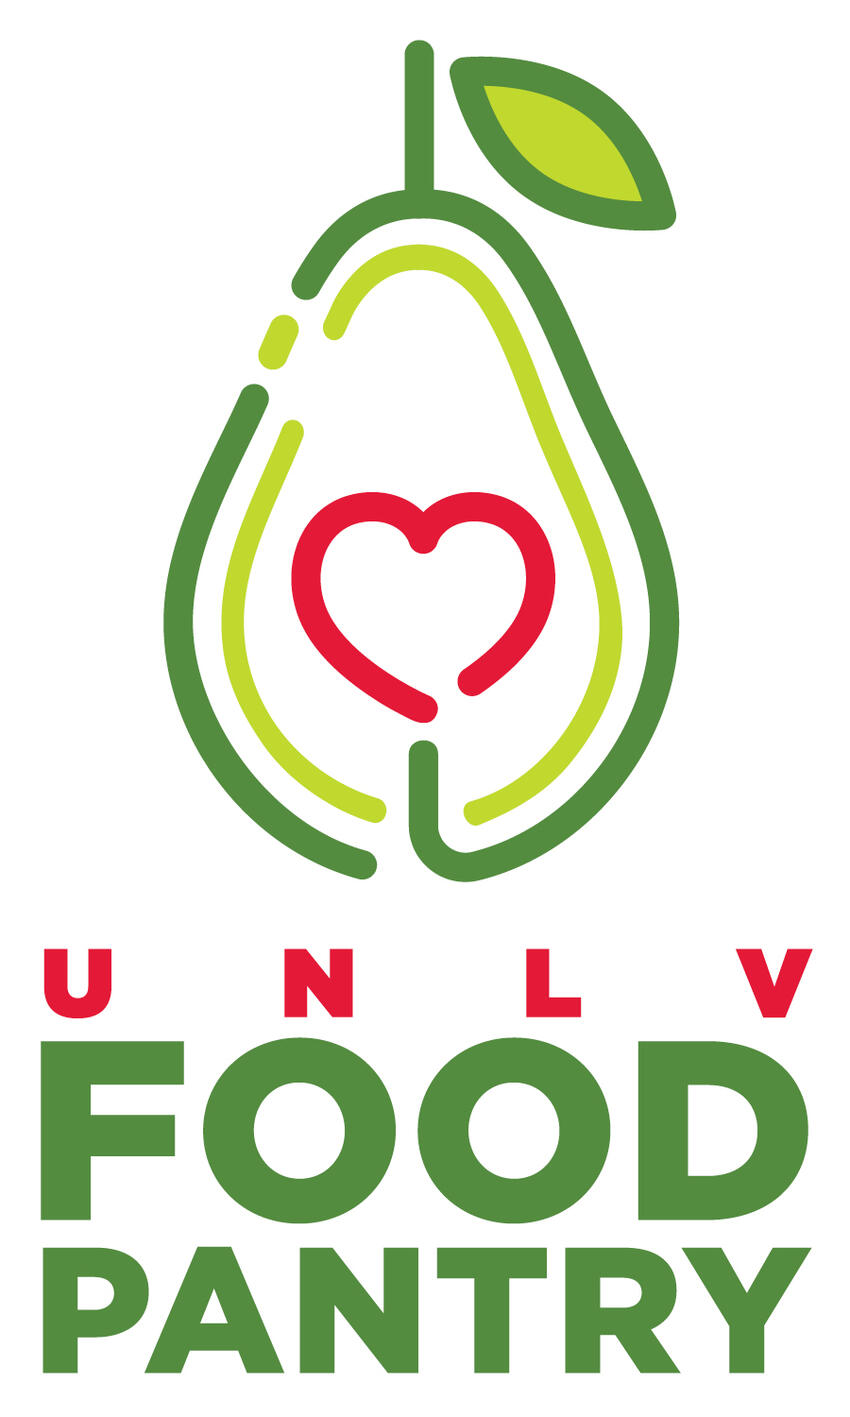 UNLV Food Pantry logo.